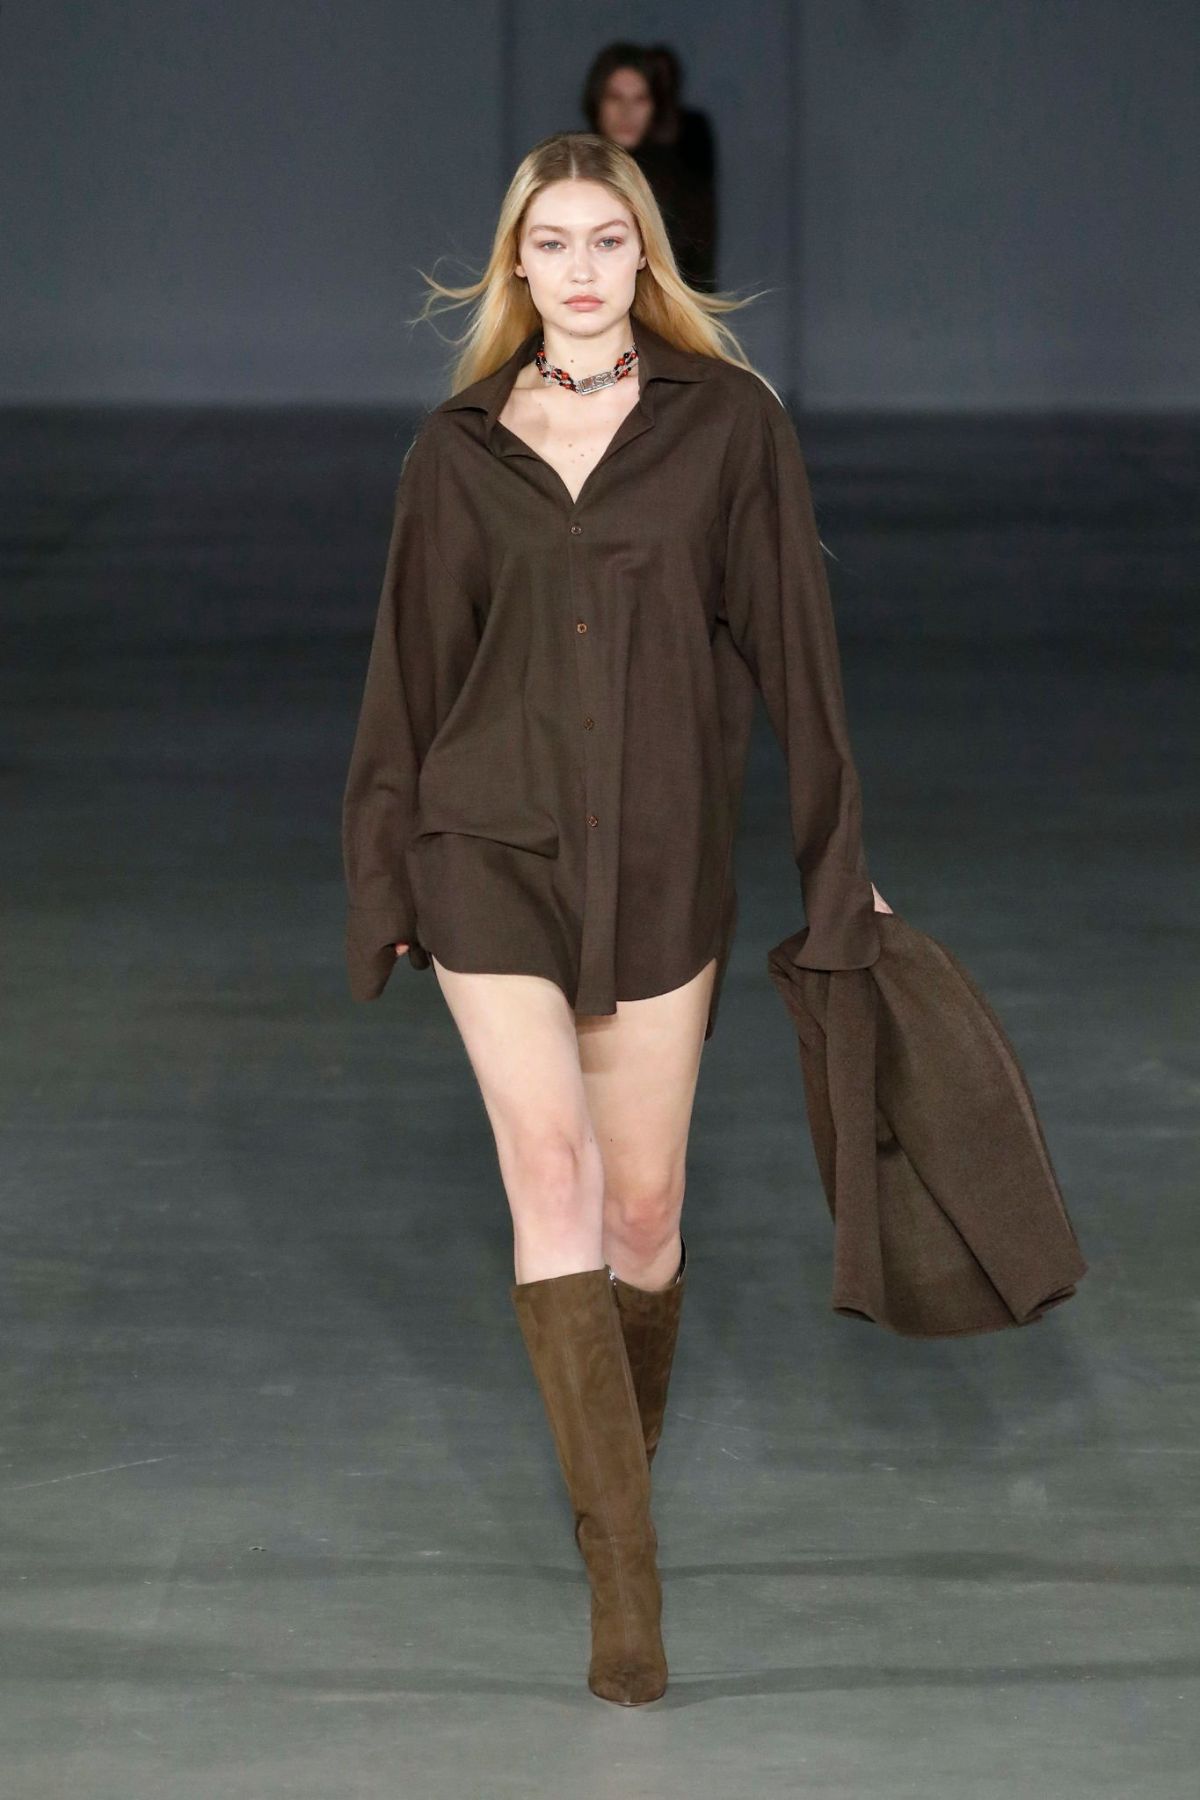 GIGI HADID Walks Runway at Ludovic De Saint-sernin Fashion Show in ...